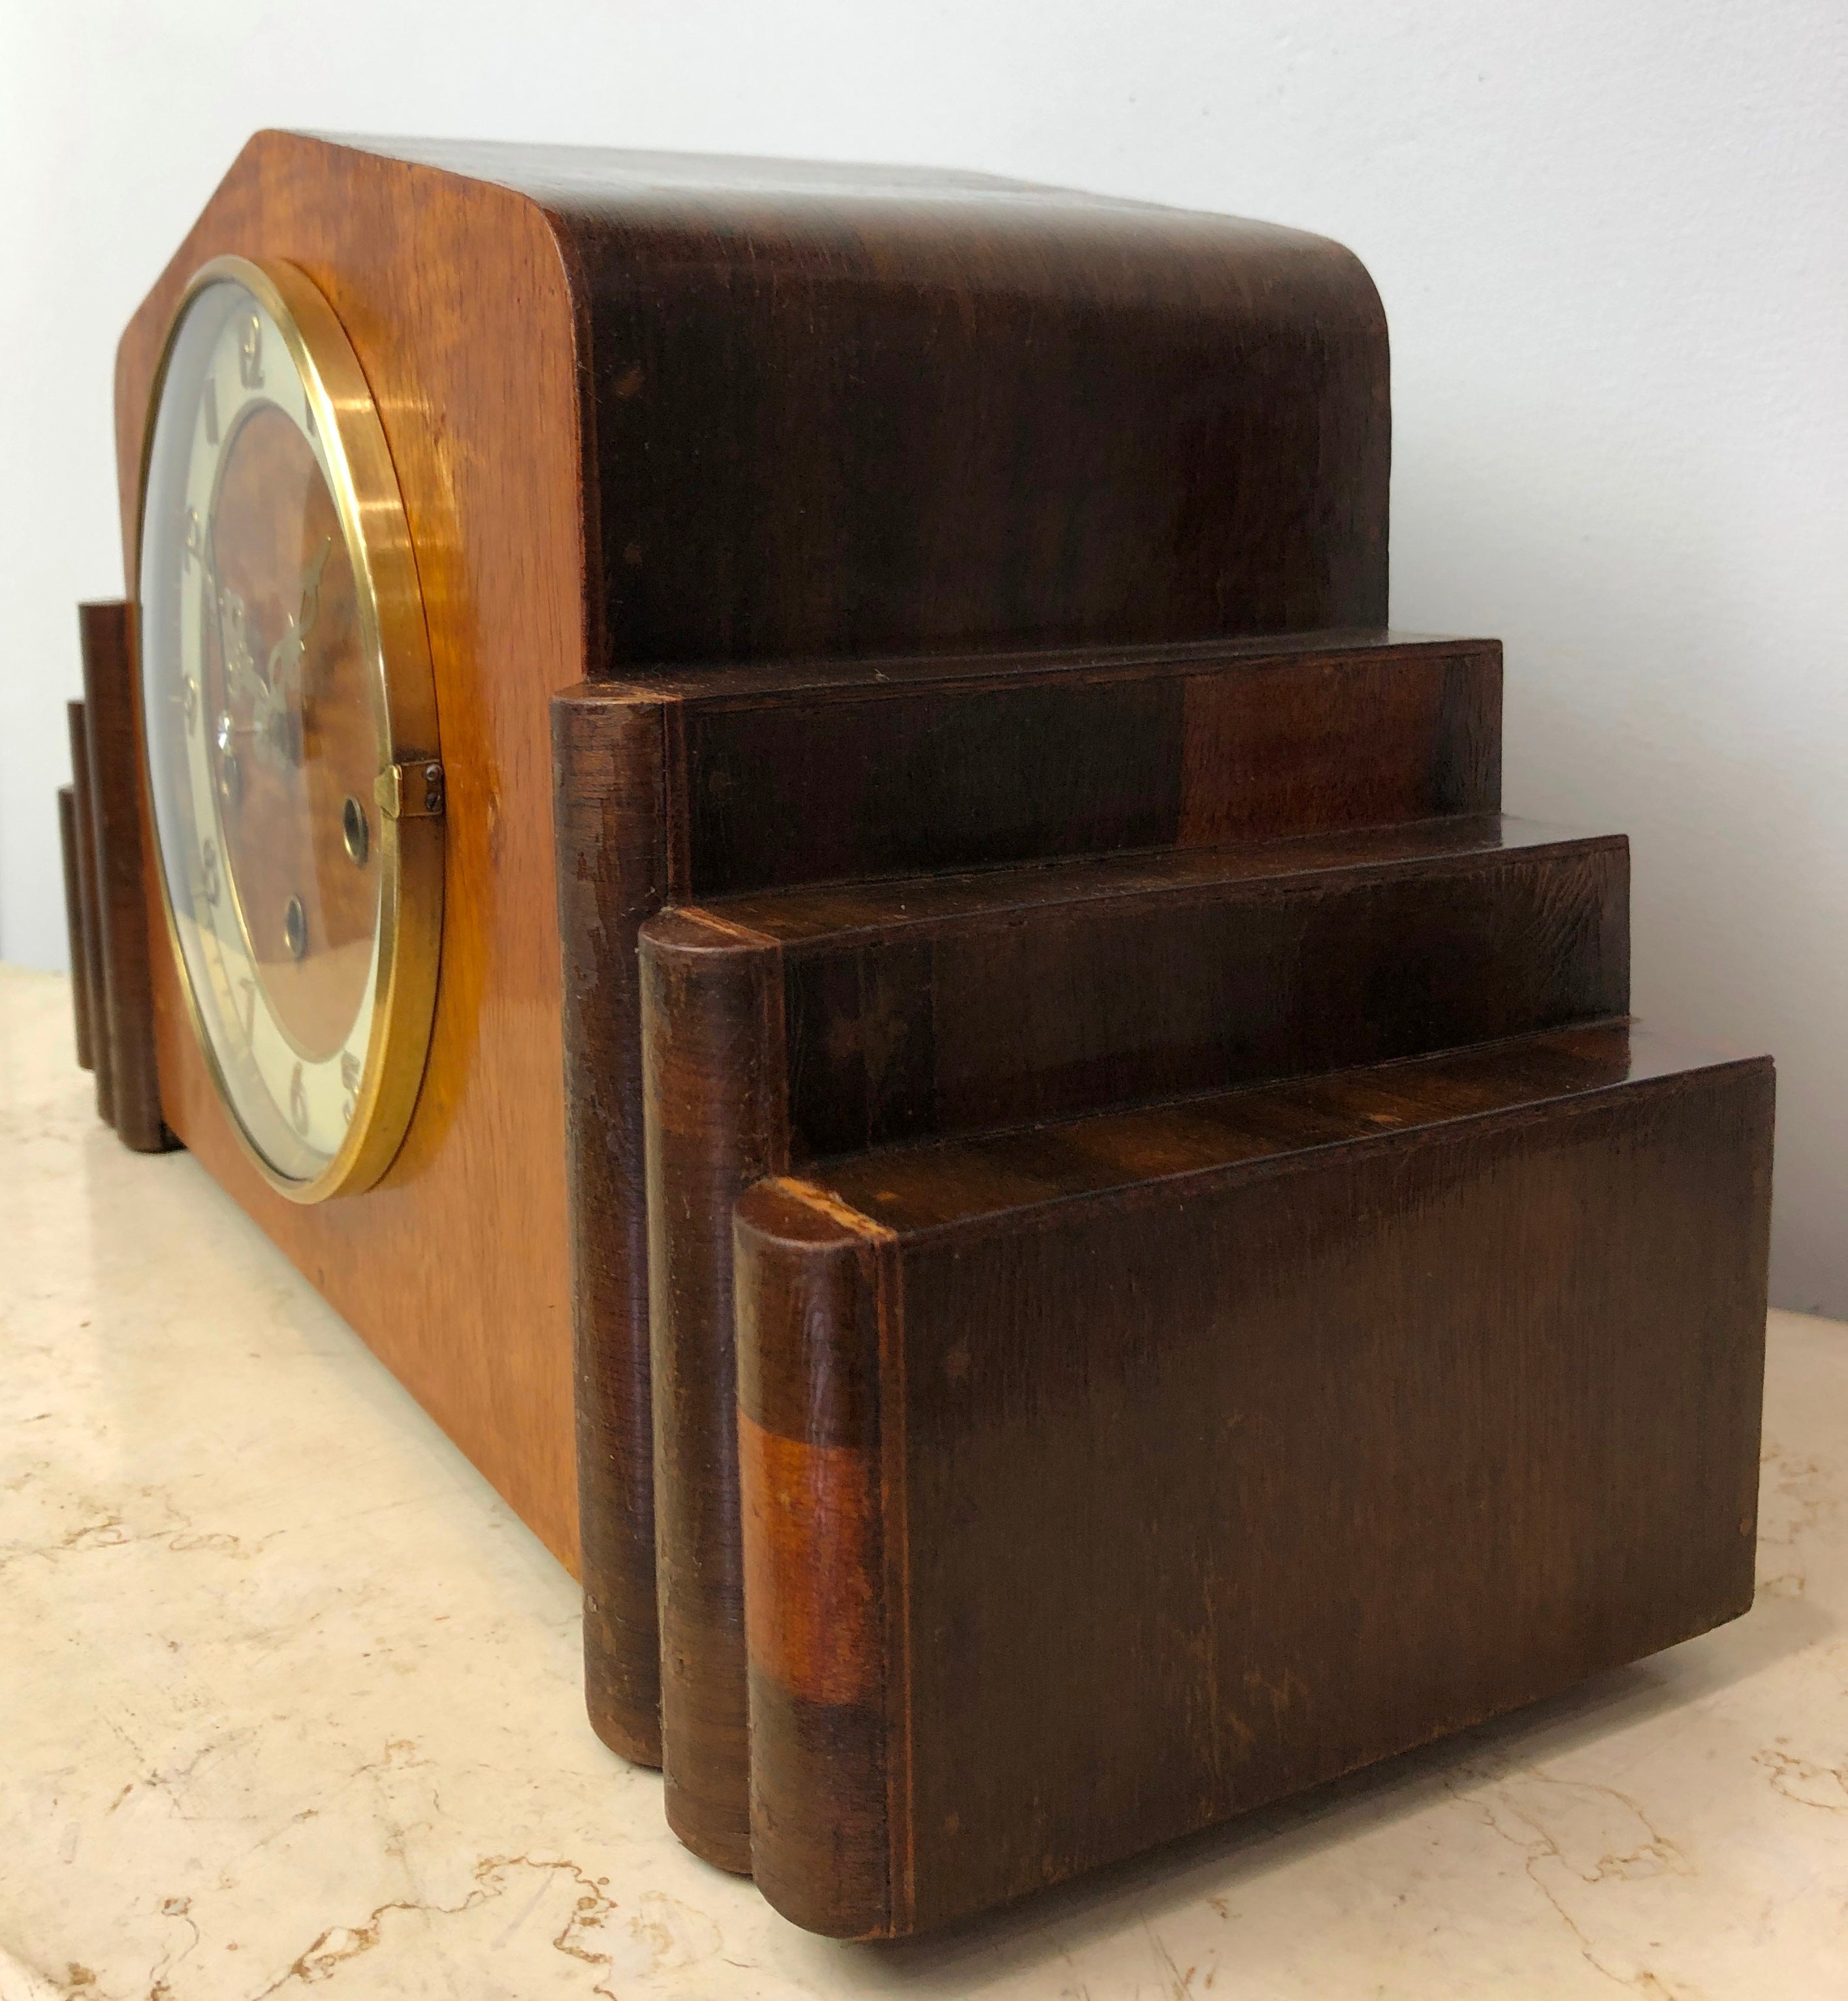 Original Vintage WESTMINSTER Mantel Clock | eXibit collection